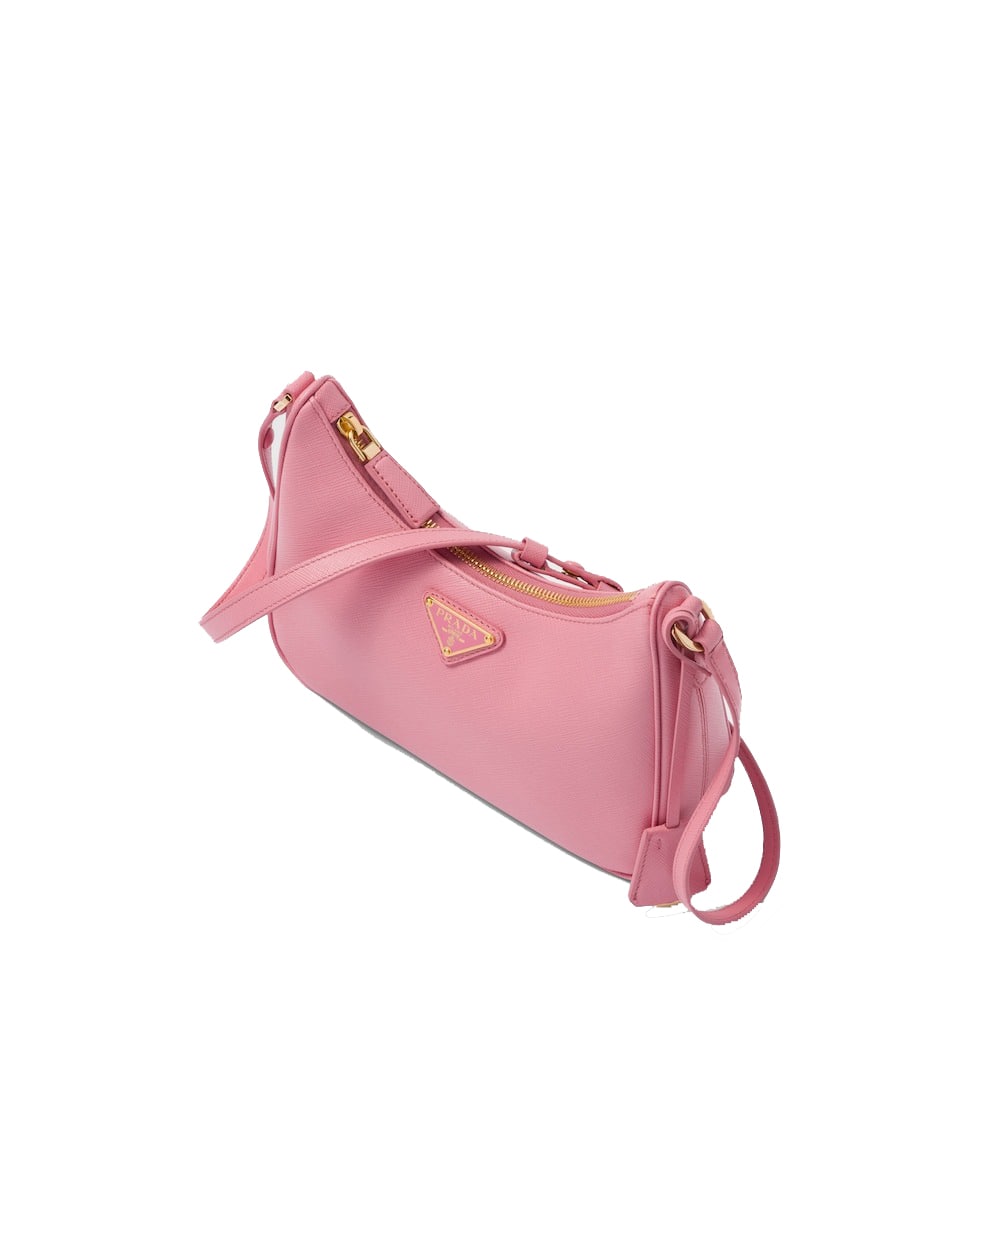 Saffiano leather mini bag petal pink